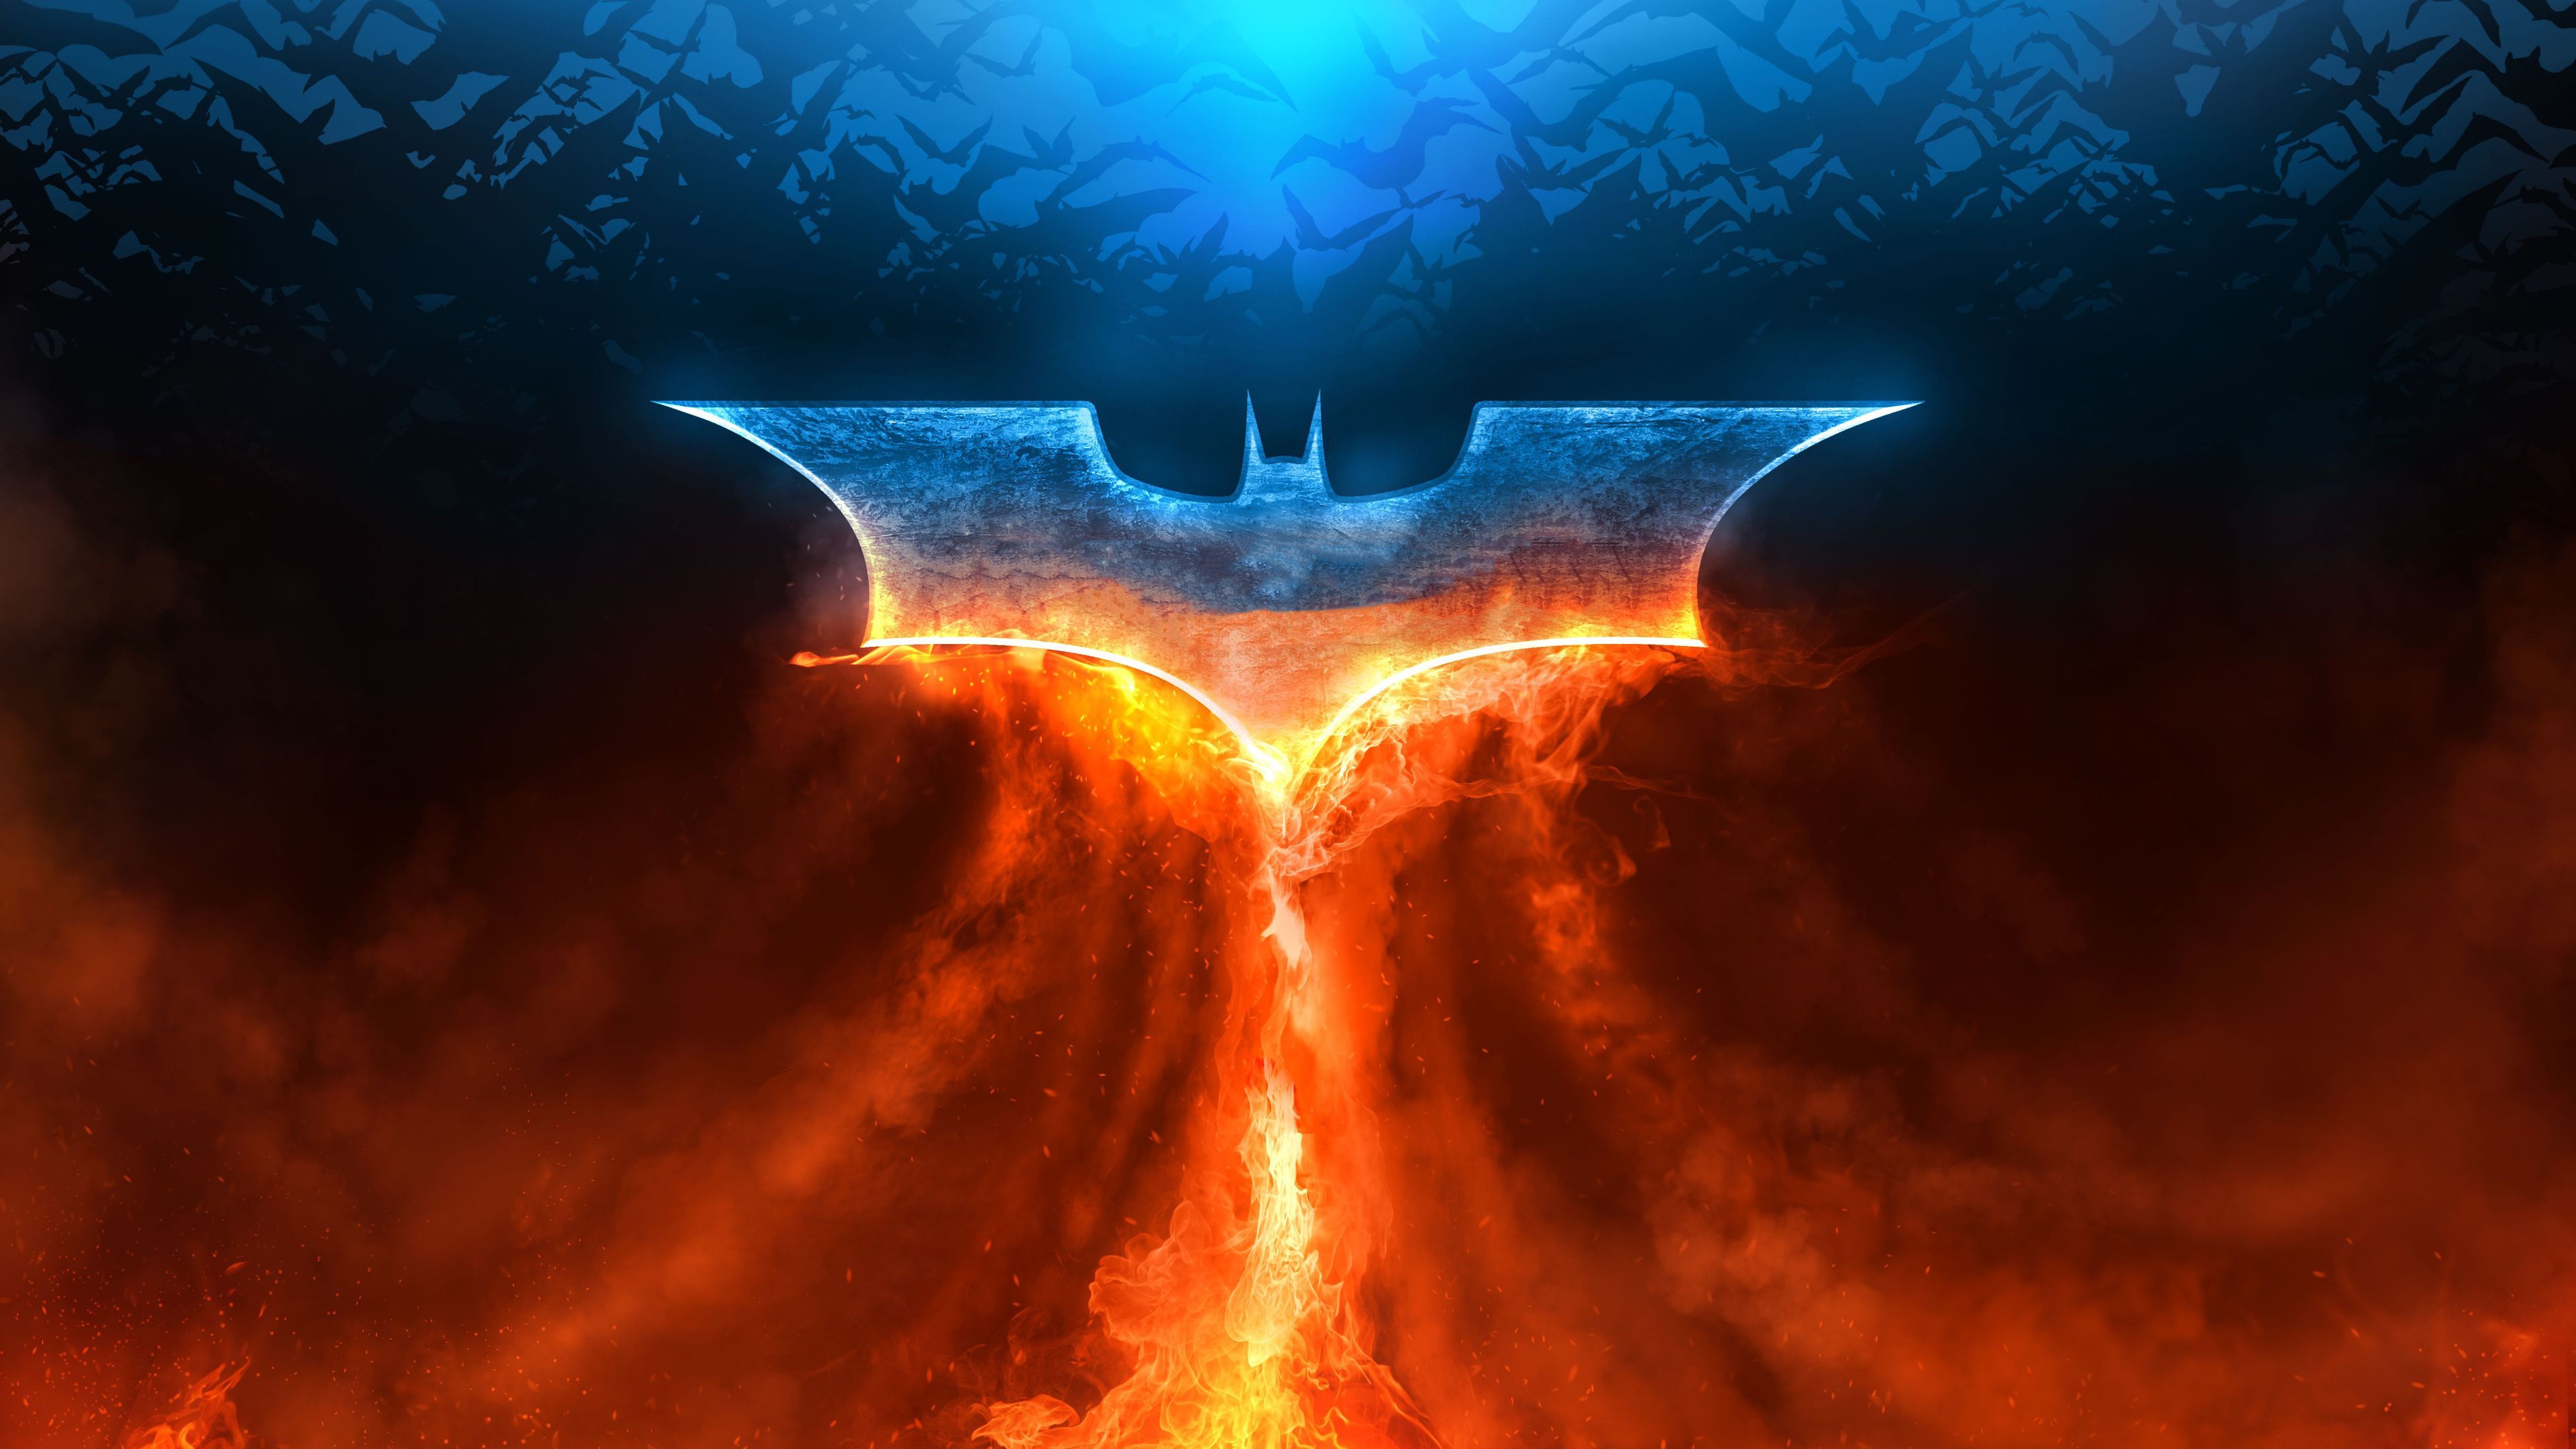 Batman Fire Rise Logo 4k superheroes wallpaper, logo wallpaper, hd- wallpaper, batman wallpaper, 5k wal. Batman wallpaper, Logo wallpaper hd, Creative graphics